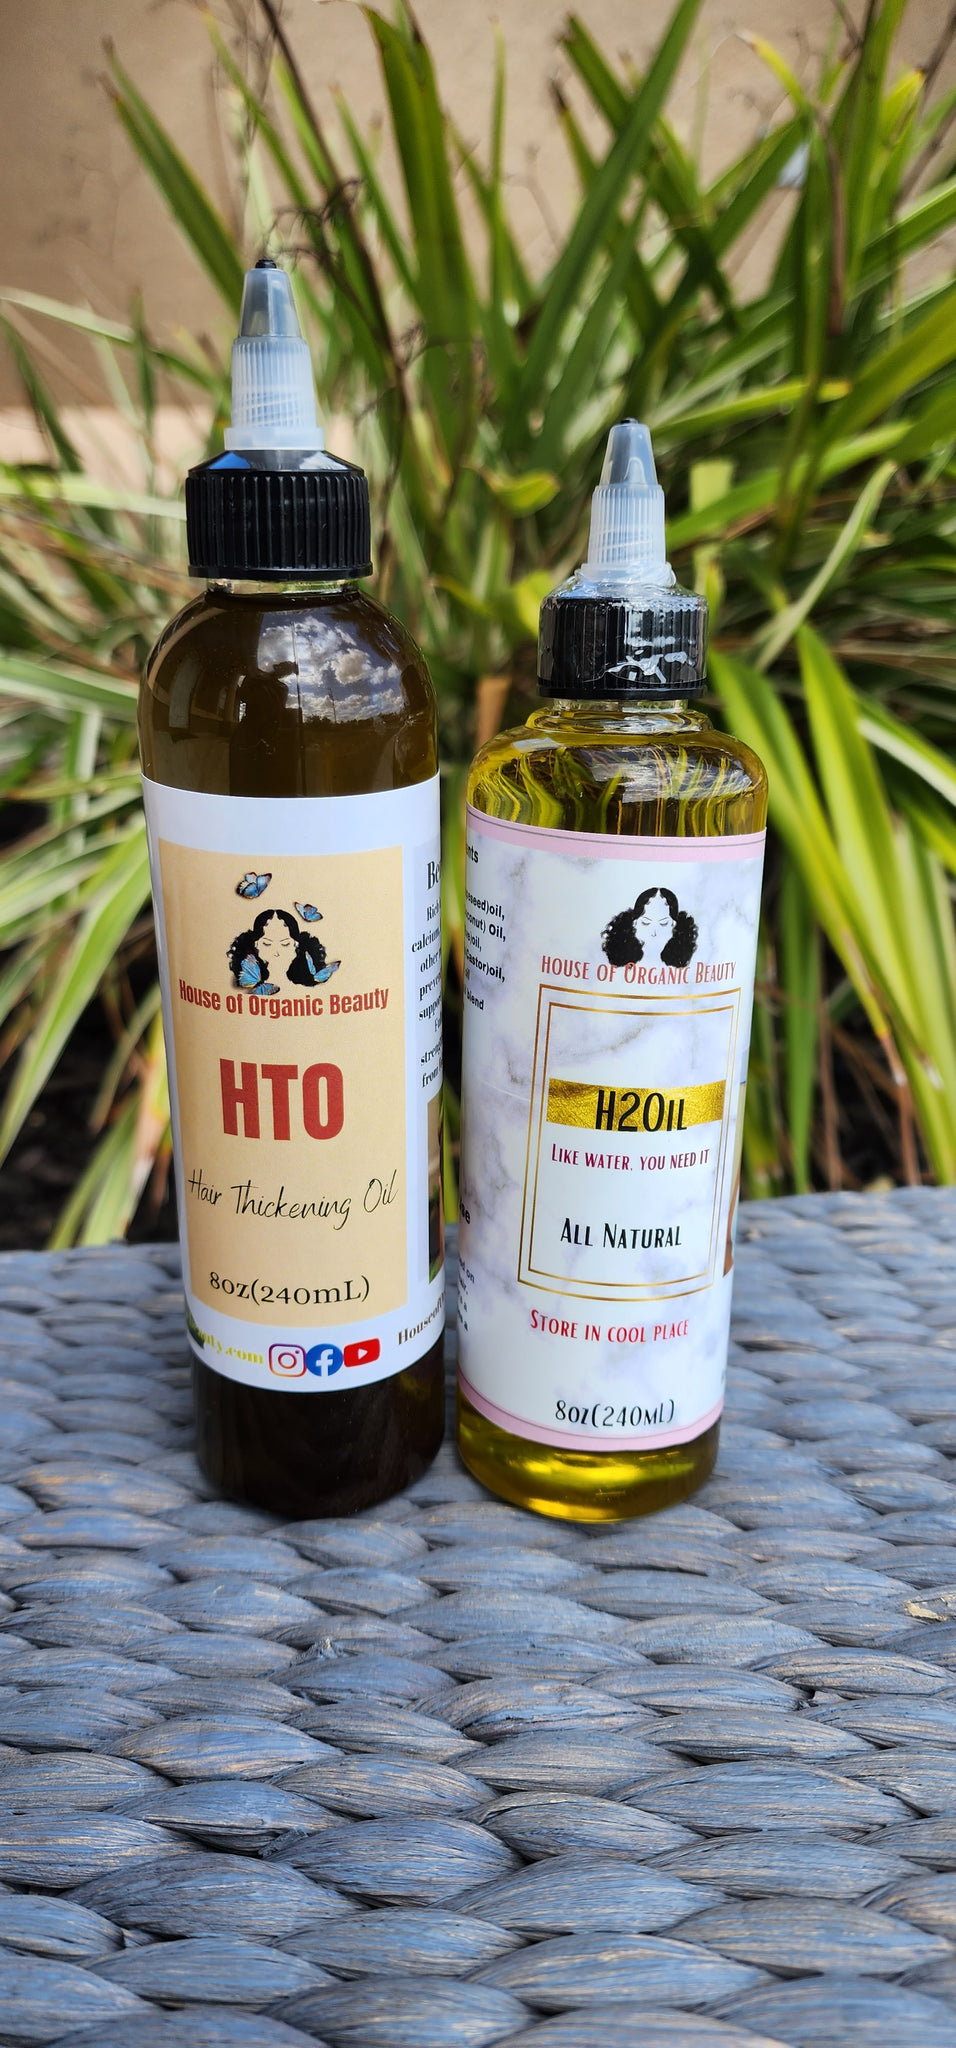 H2oil & HTO(Hair thickening oil) 8oz